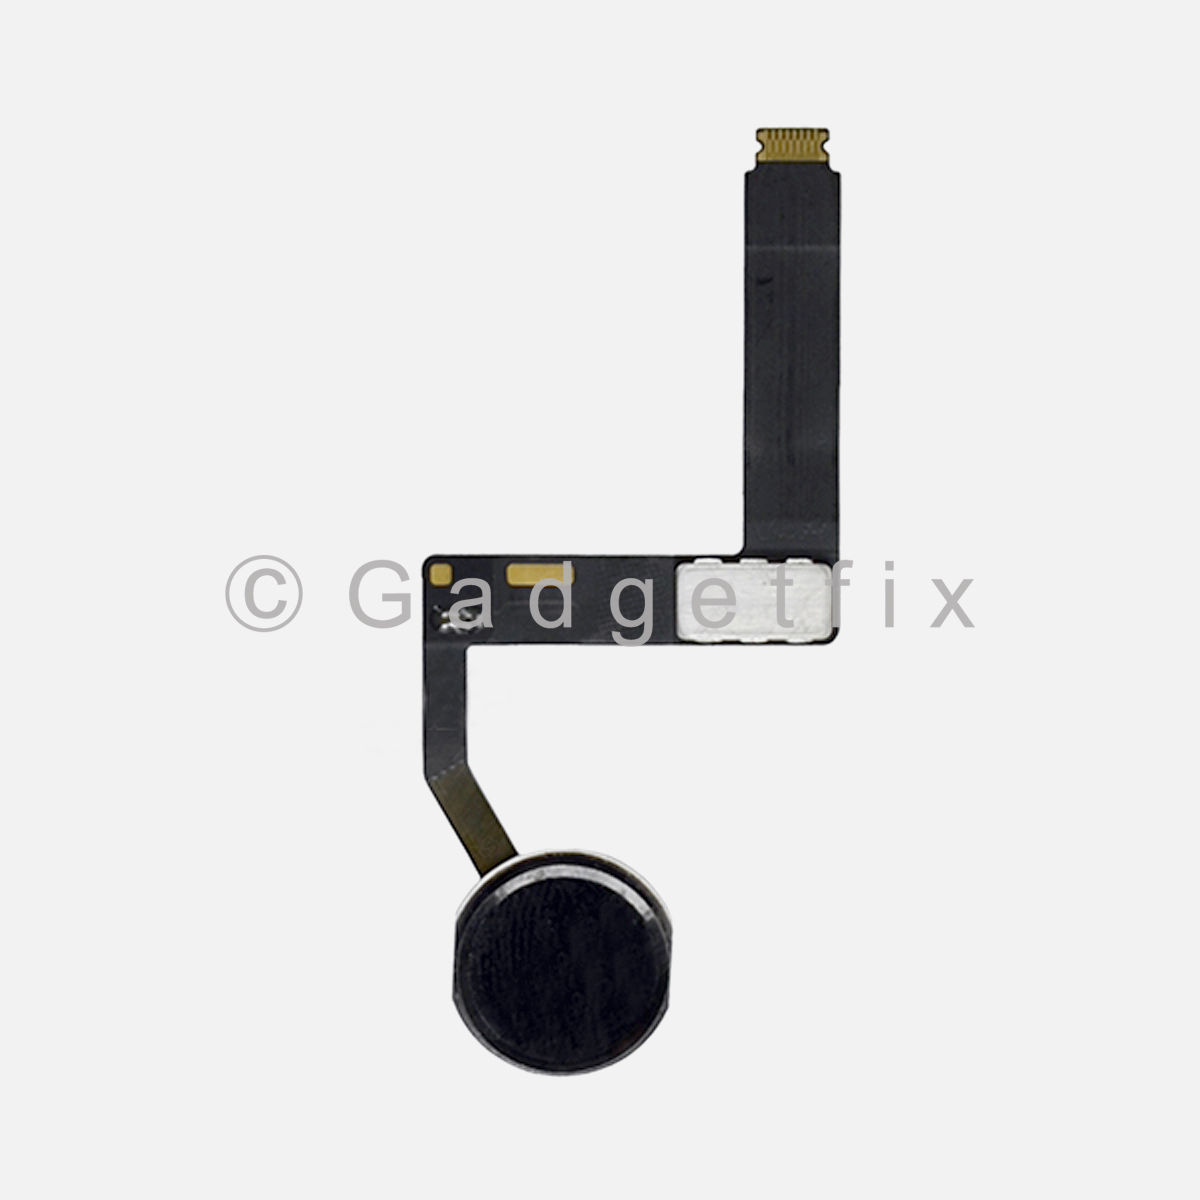 Black Home Menu Button Flex Cable Replacement for iPad Pro 9.7 A1673 A1674 A1675